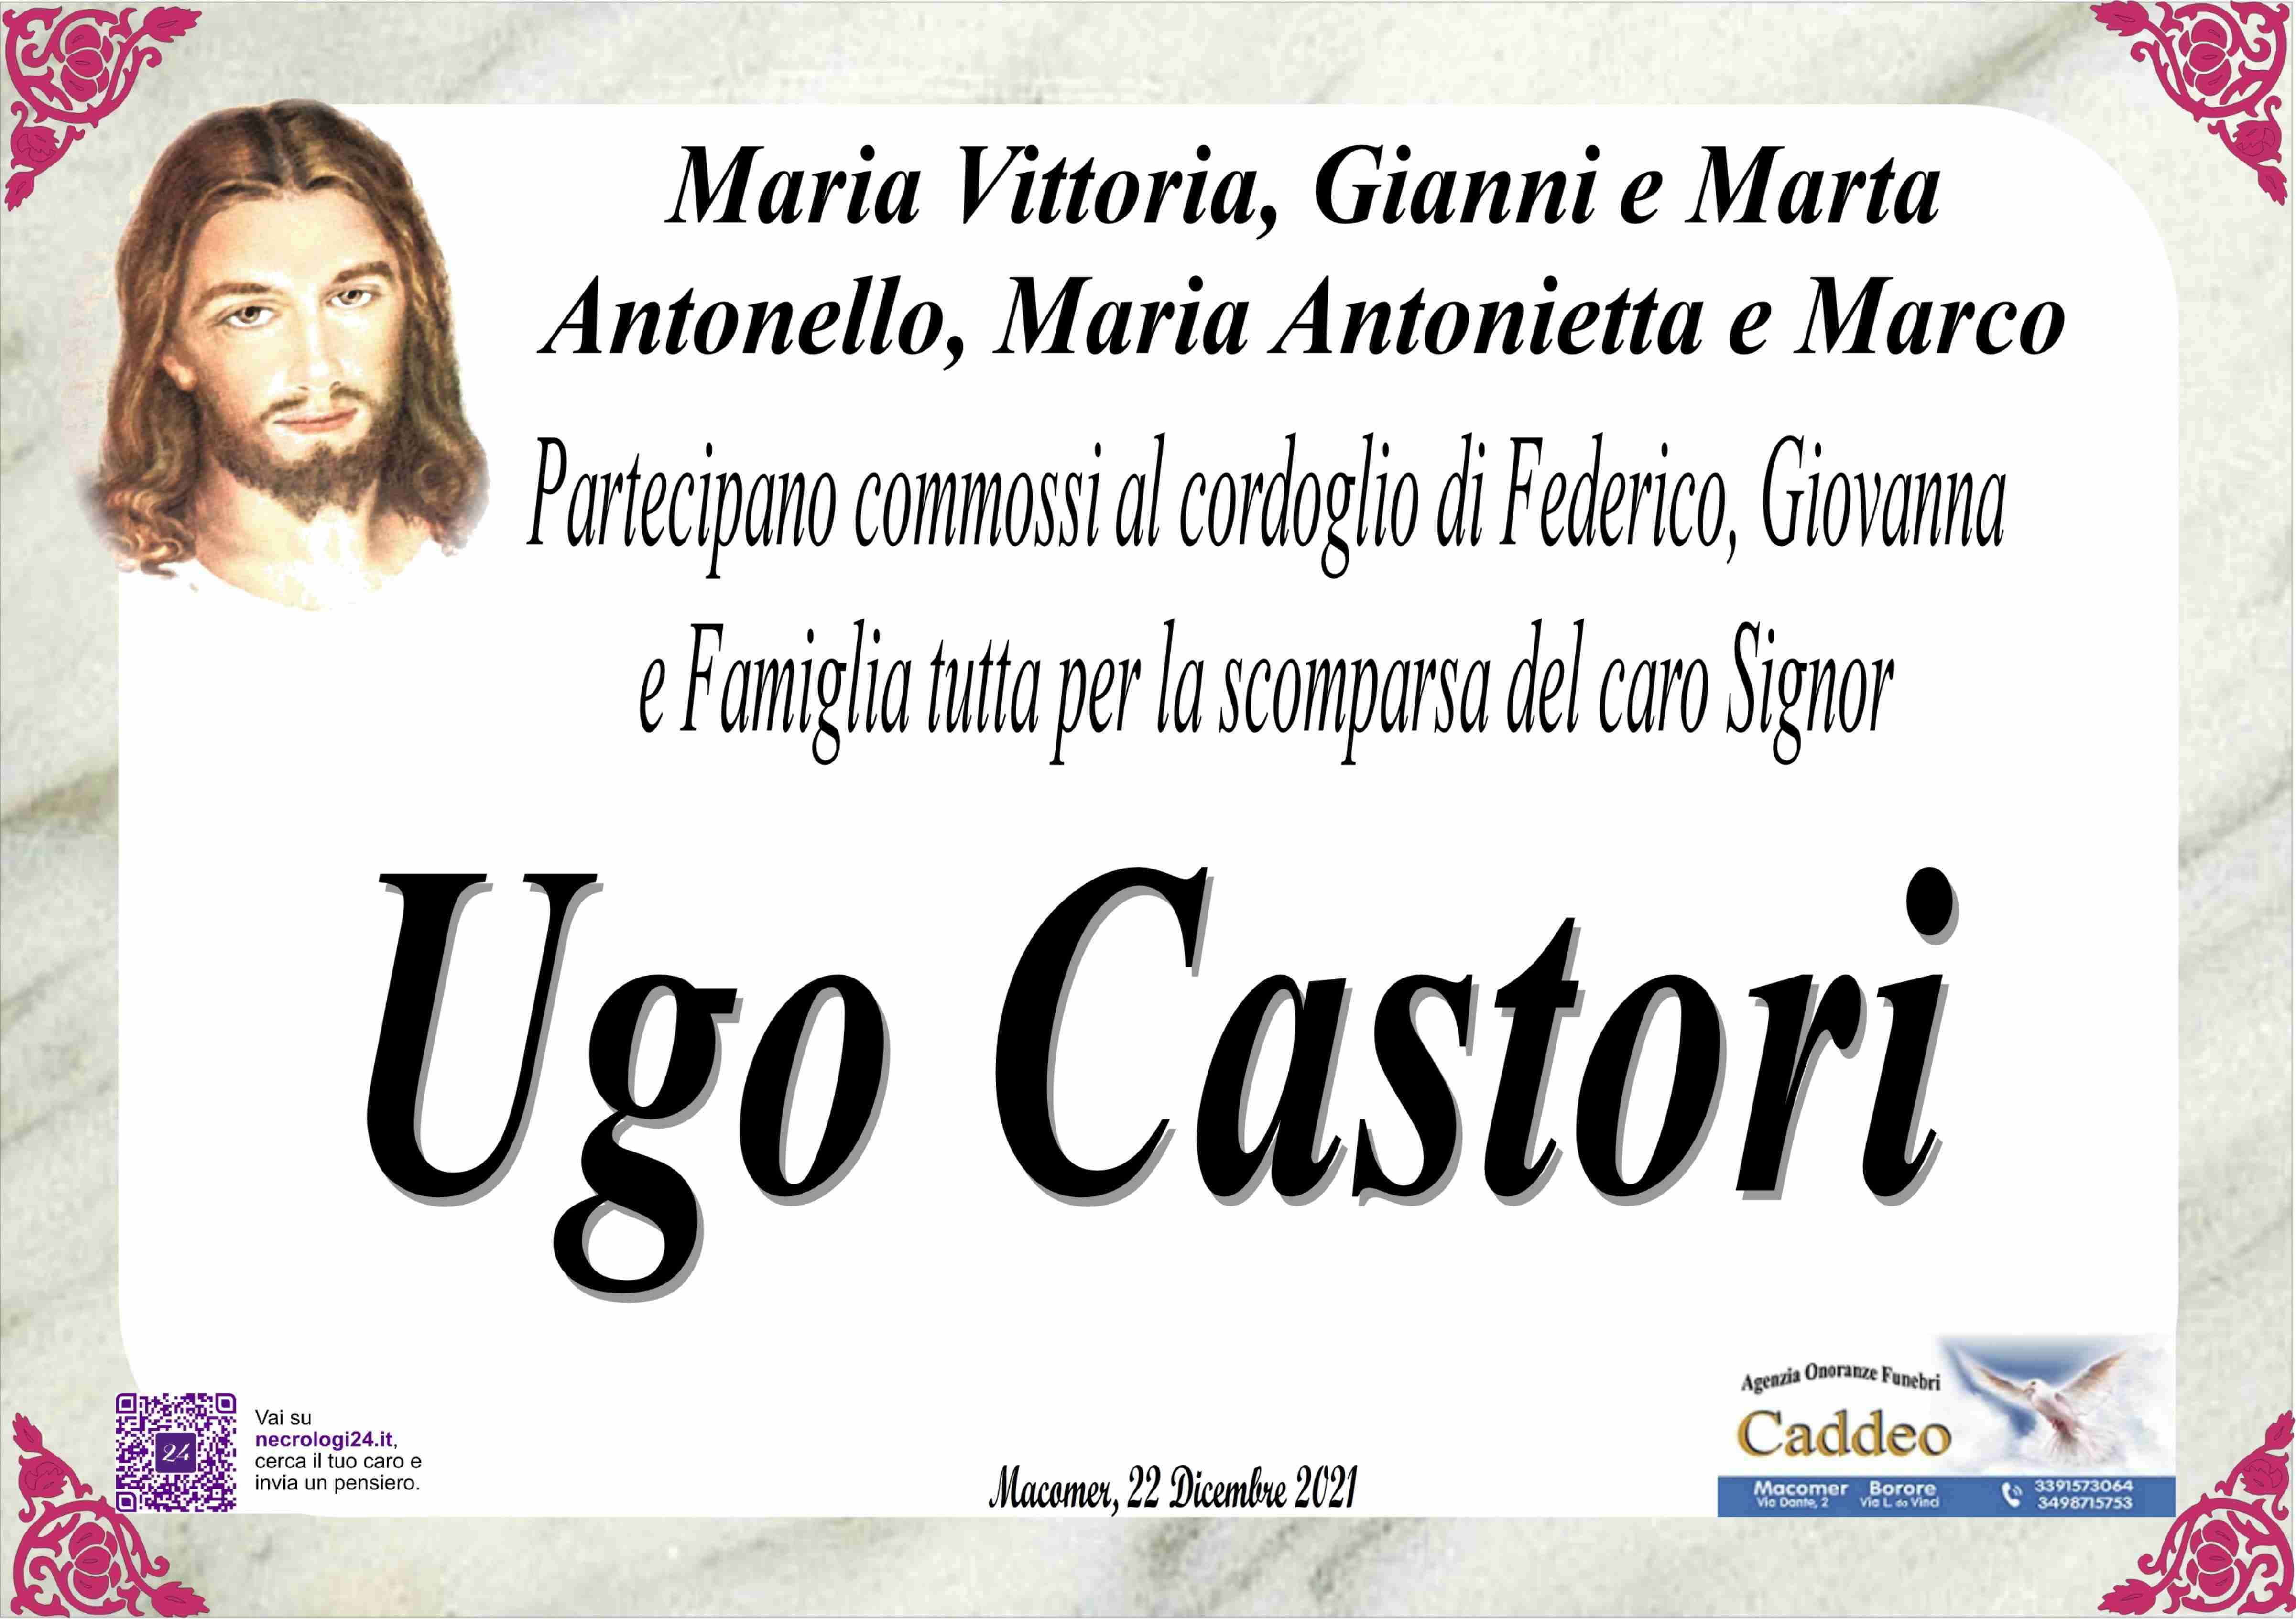 Ugo Castori